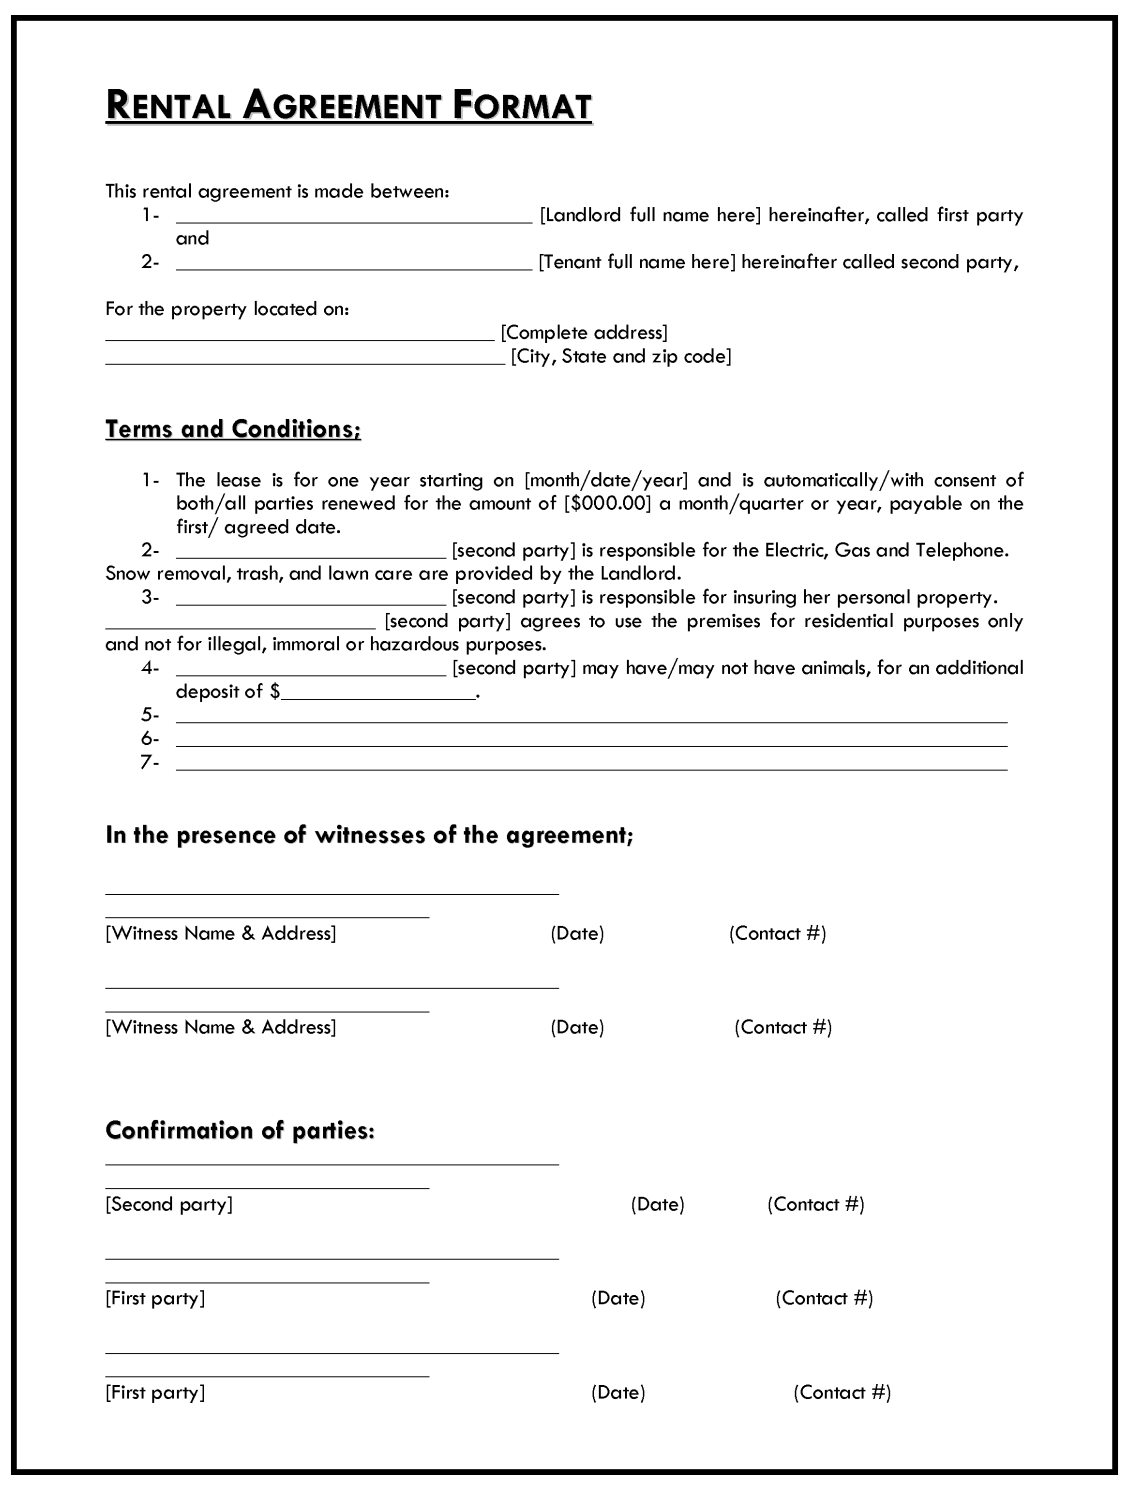 Rental Agreement Format Free Download